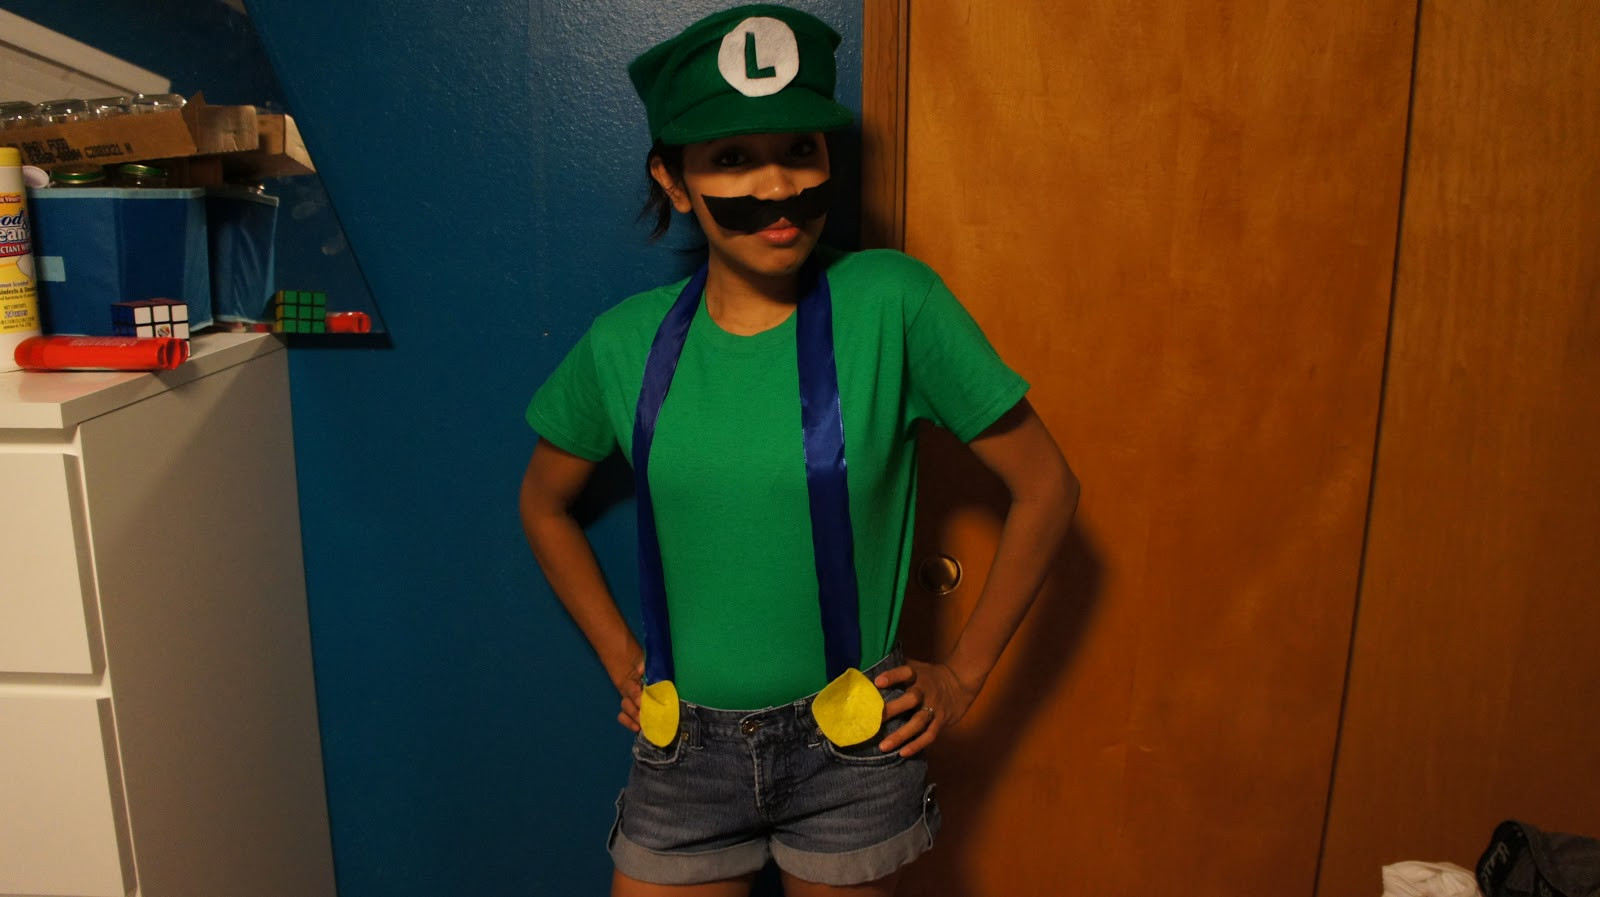 Best ideas about Mario And Luigi DIY Costumes
. Save or Pin DIY Mario & Luigi Costumes Now.